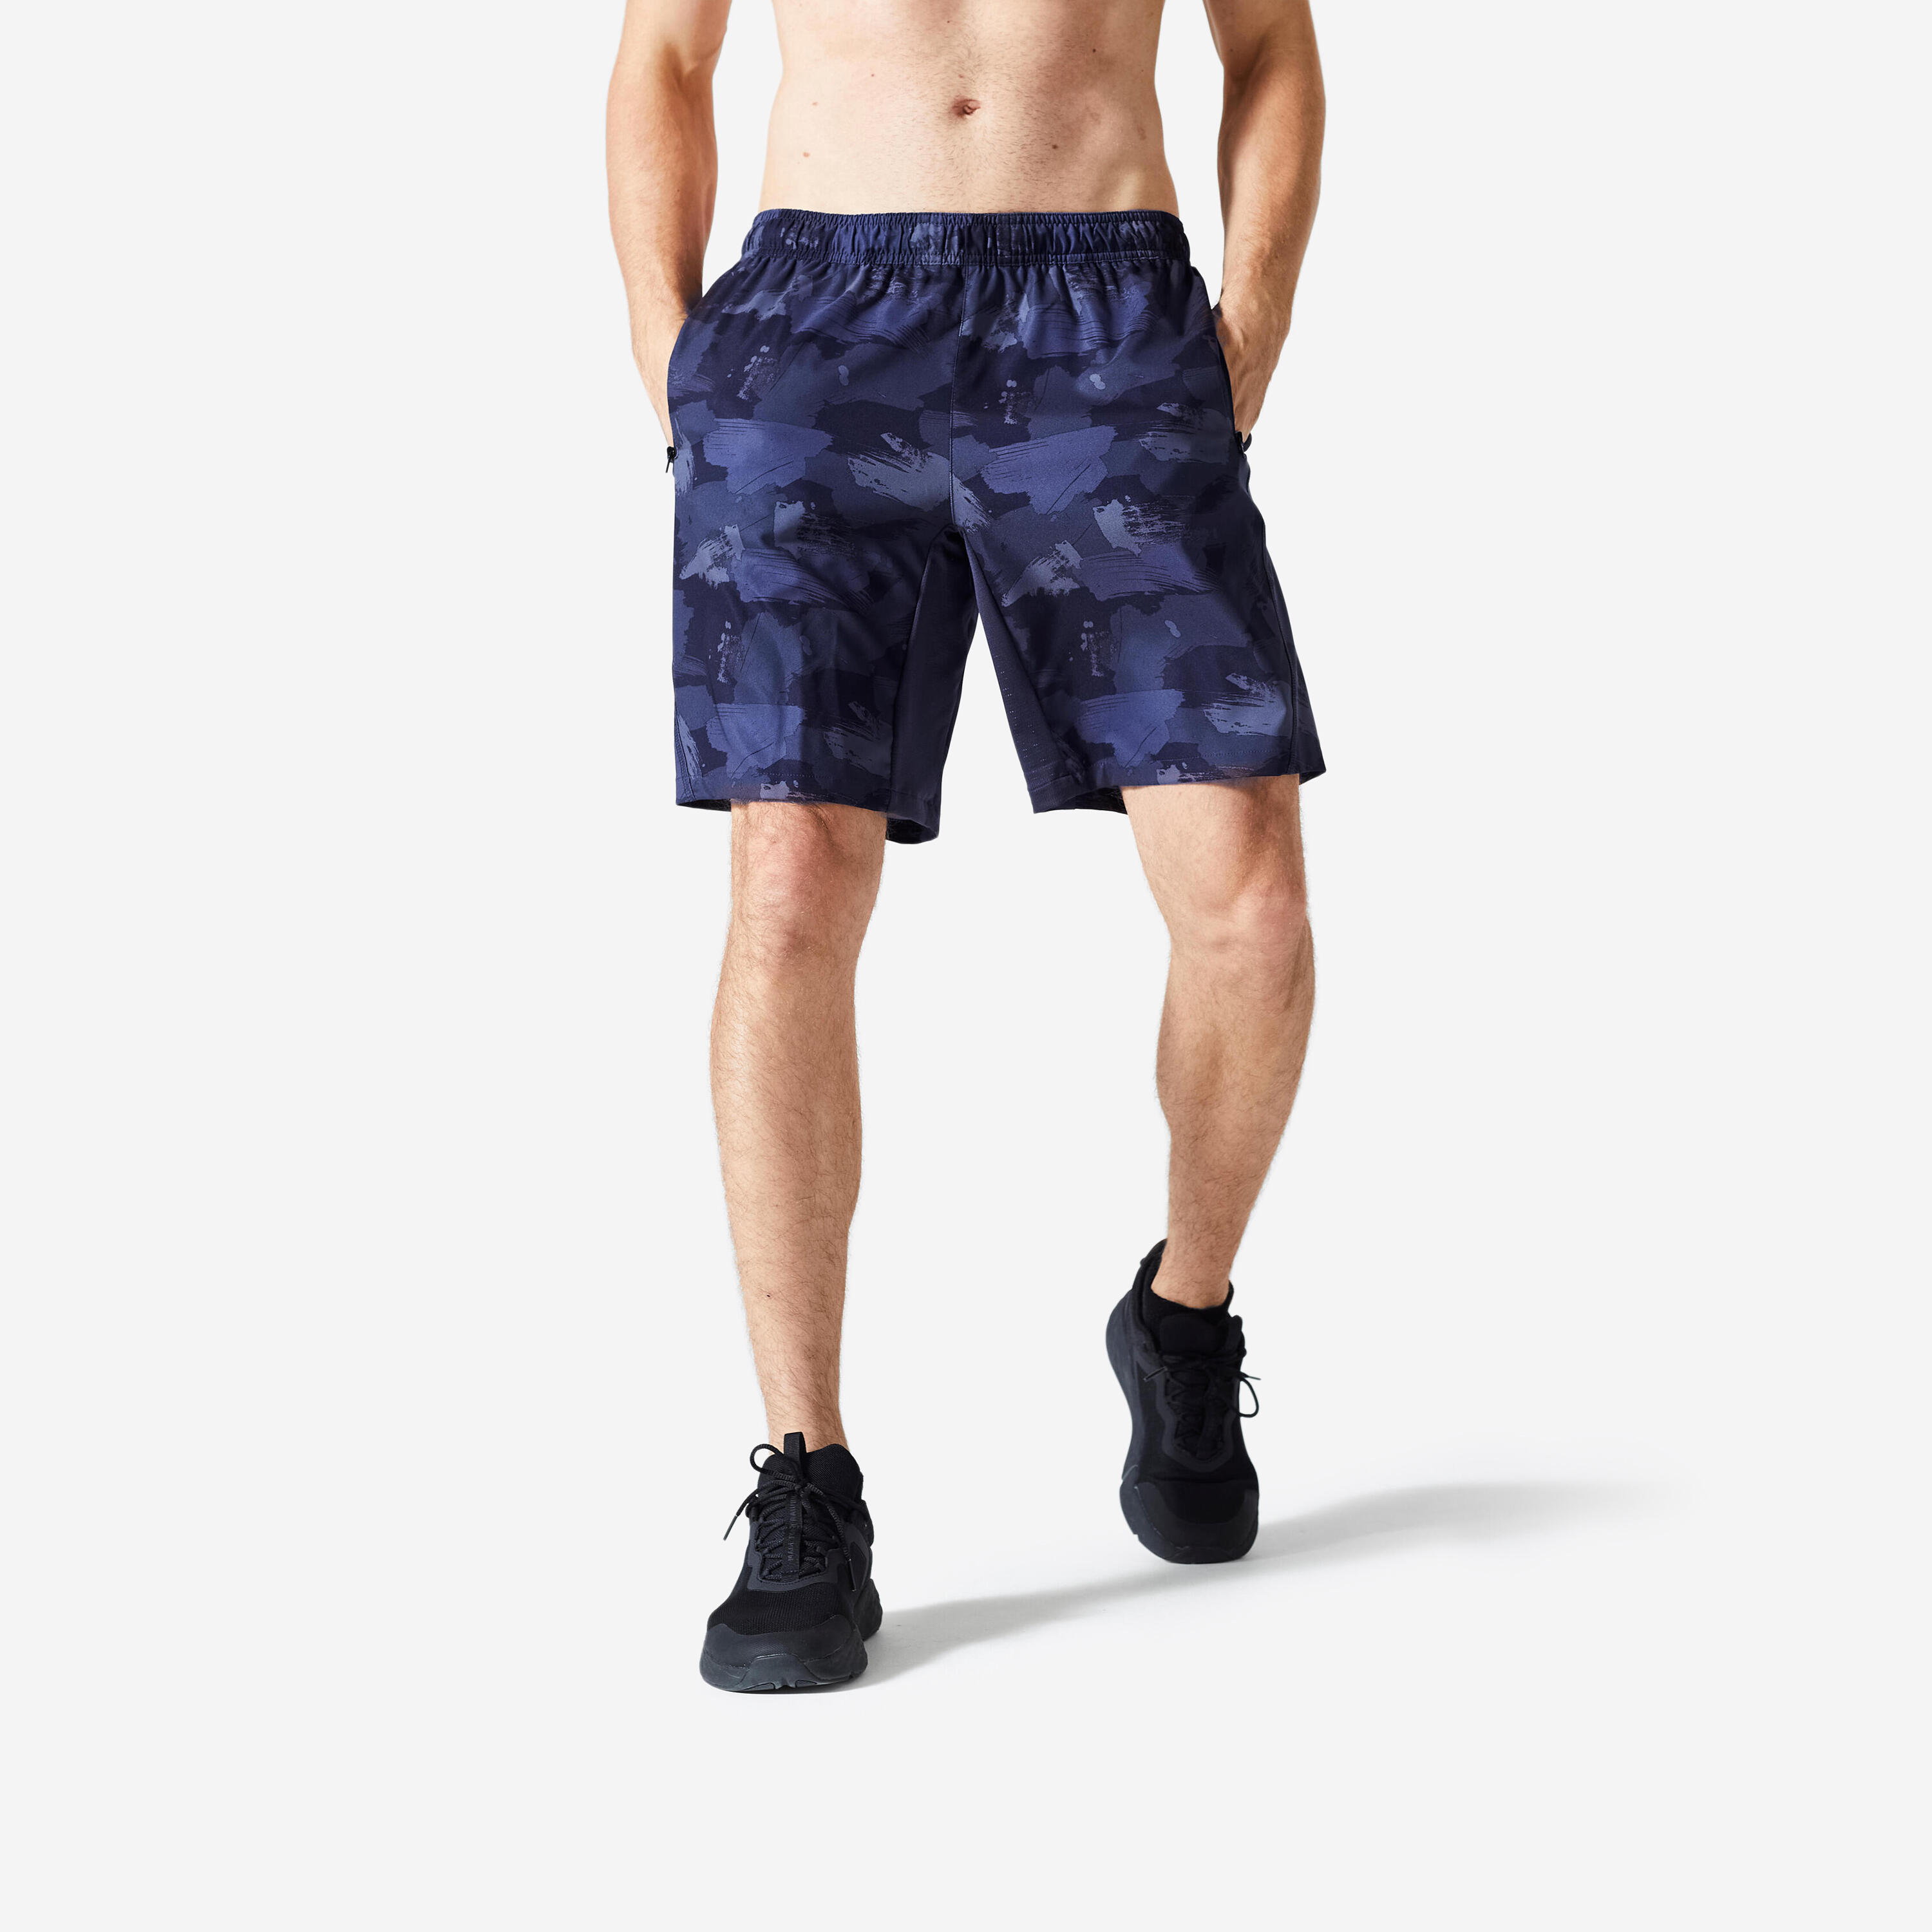 DOMYOS Men's Zip Pocket Breathable Essential Fitness Shorts - Blue Camo